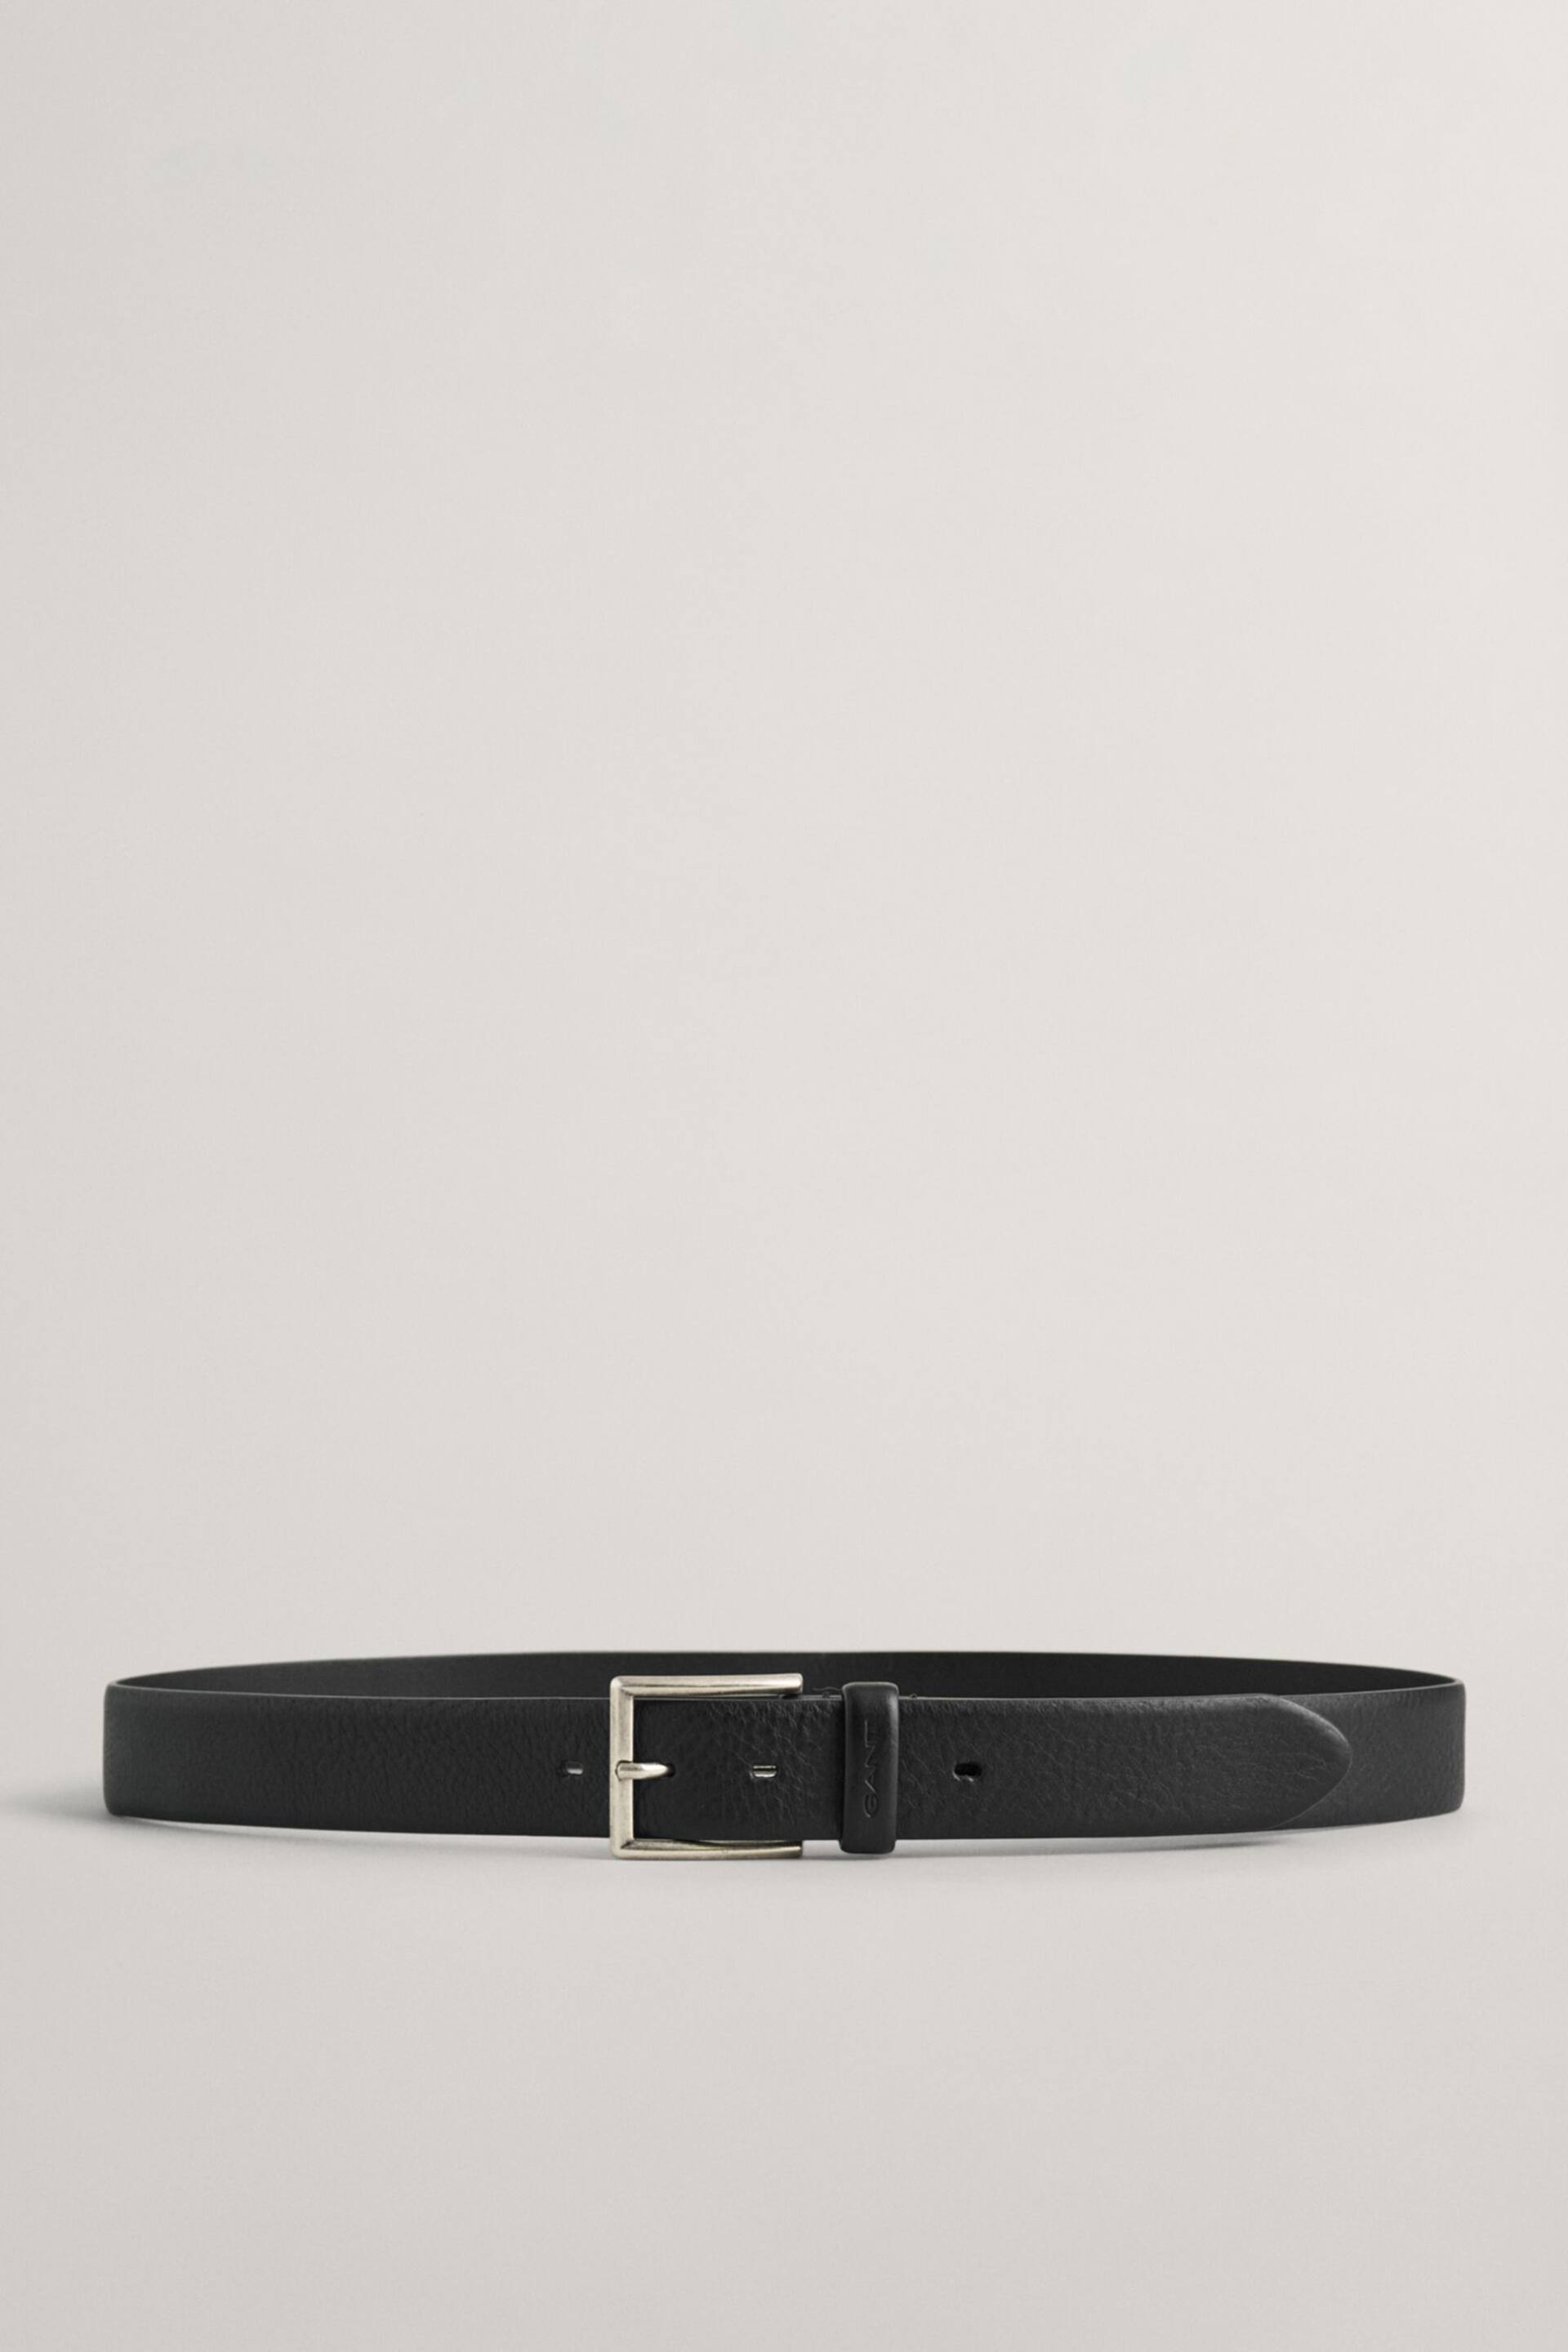 GANT Classic Leather Belt - Image 1 of 4